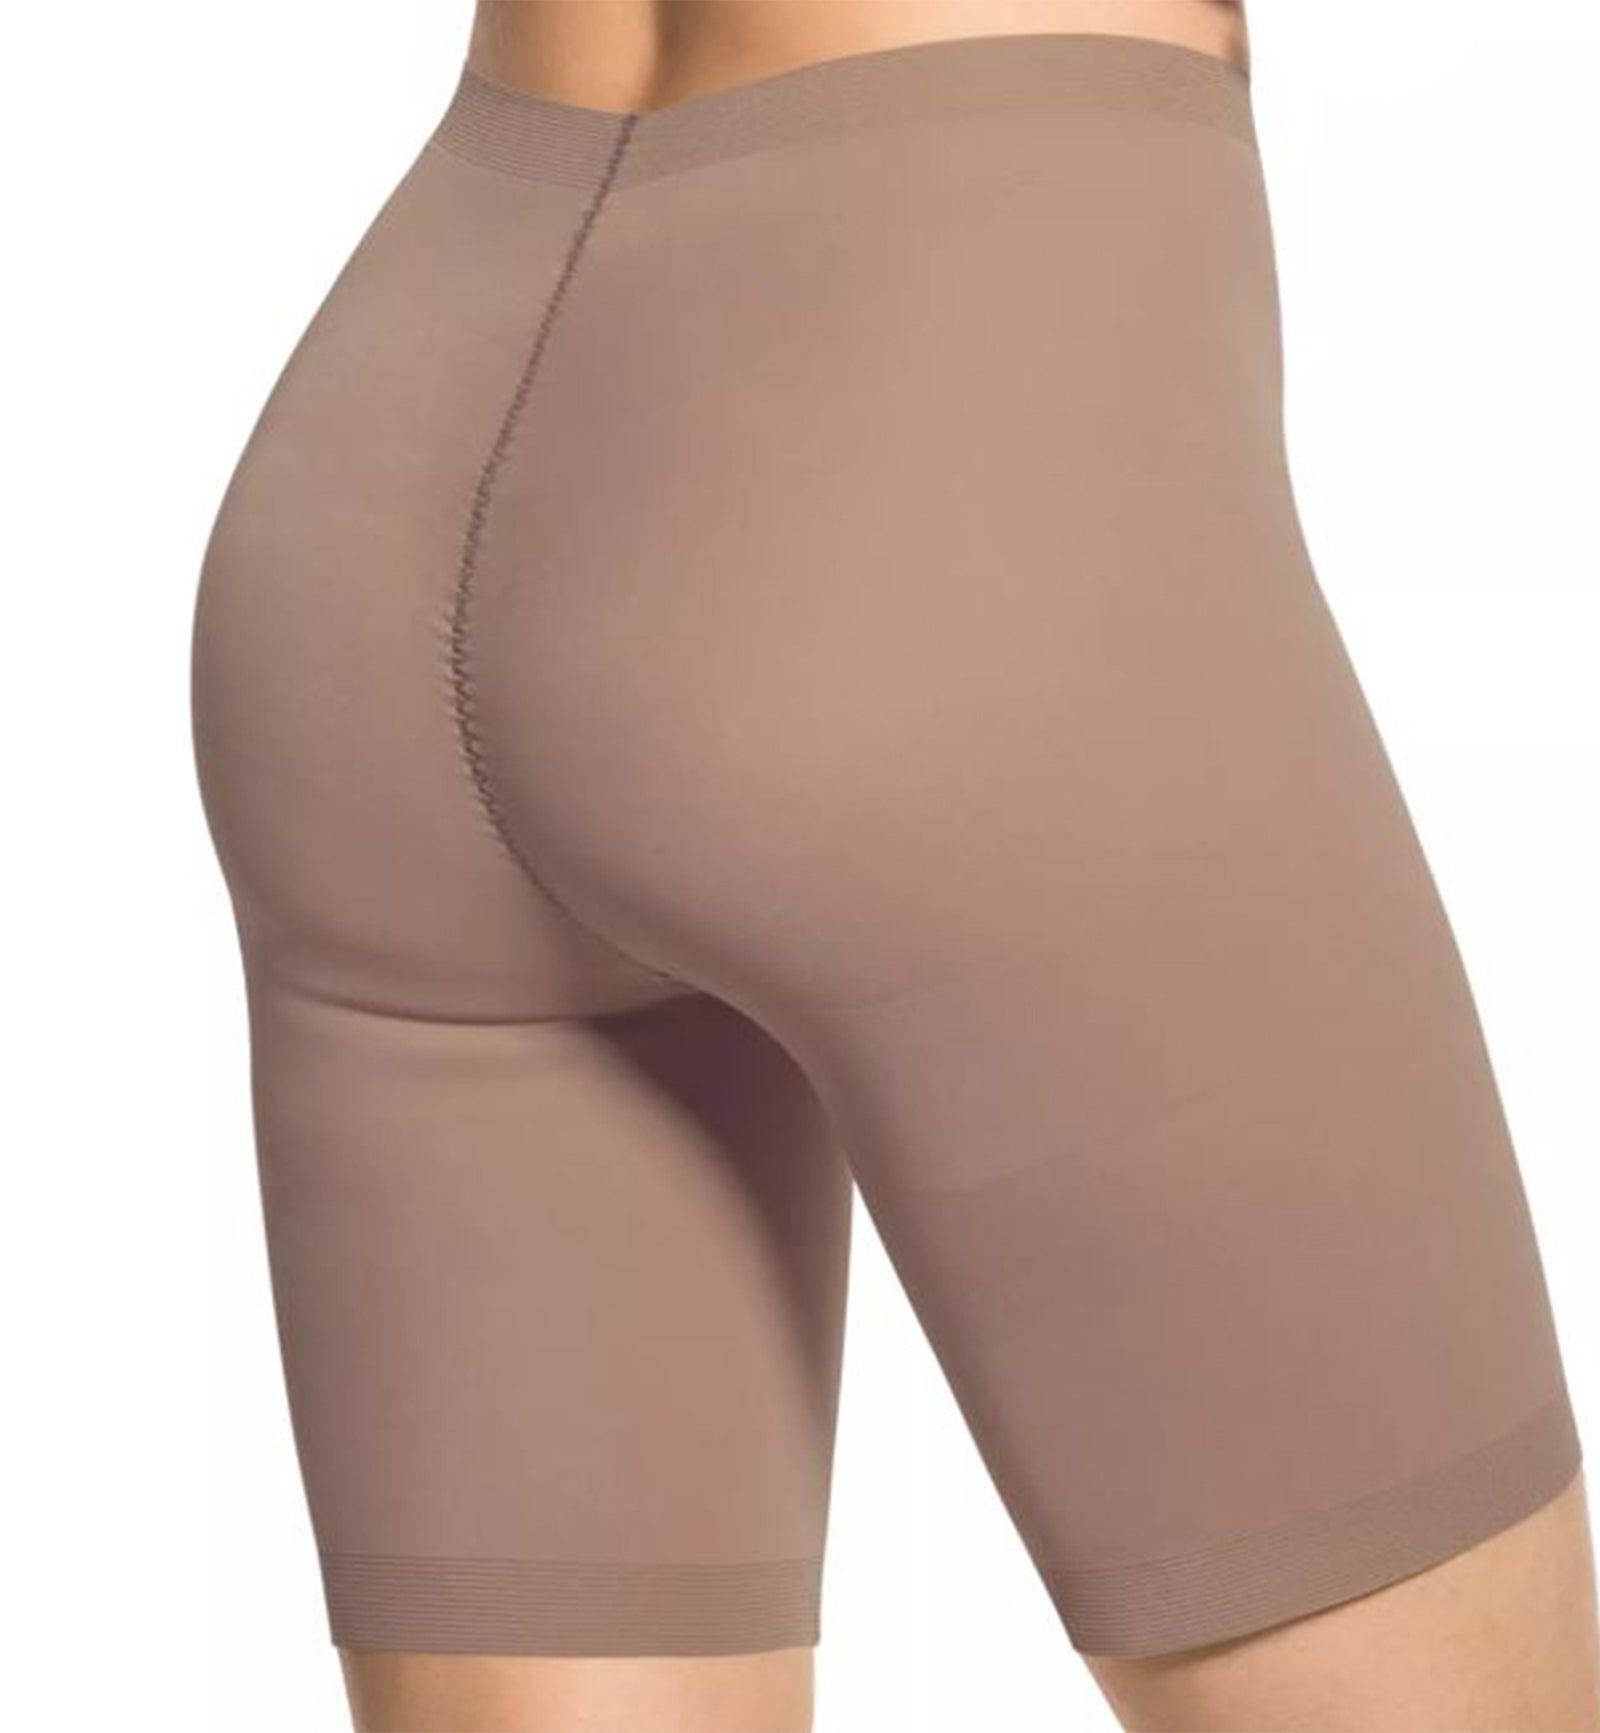 Leonisa Moderate Control Butt Enhancing Shaper Short (012671),Large,Natural - Natural,Large